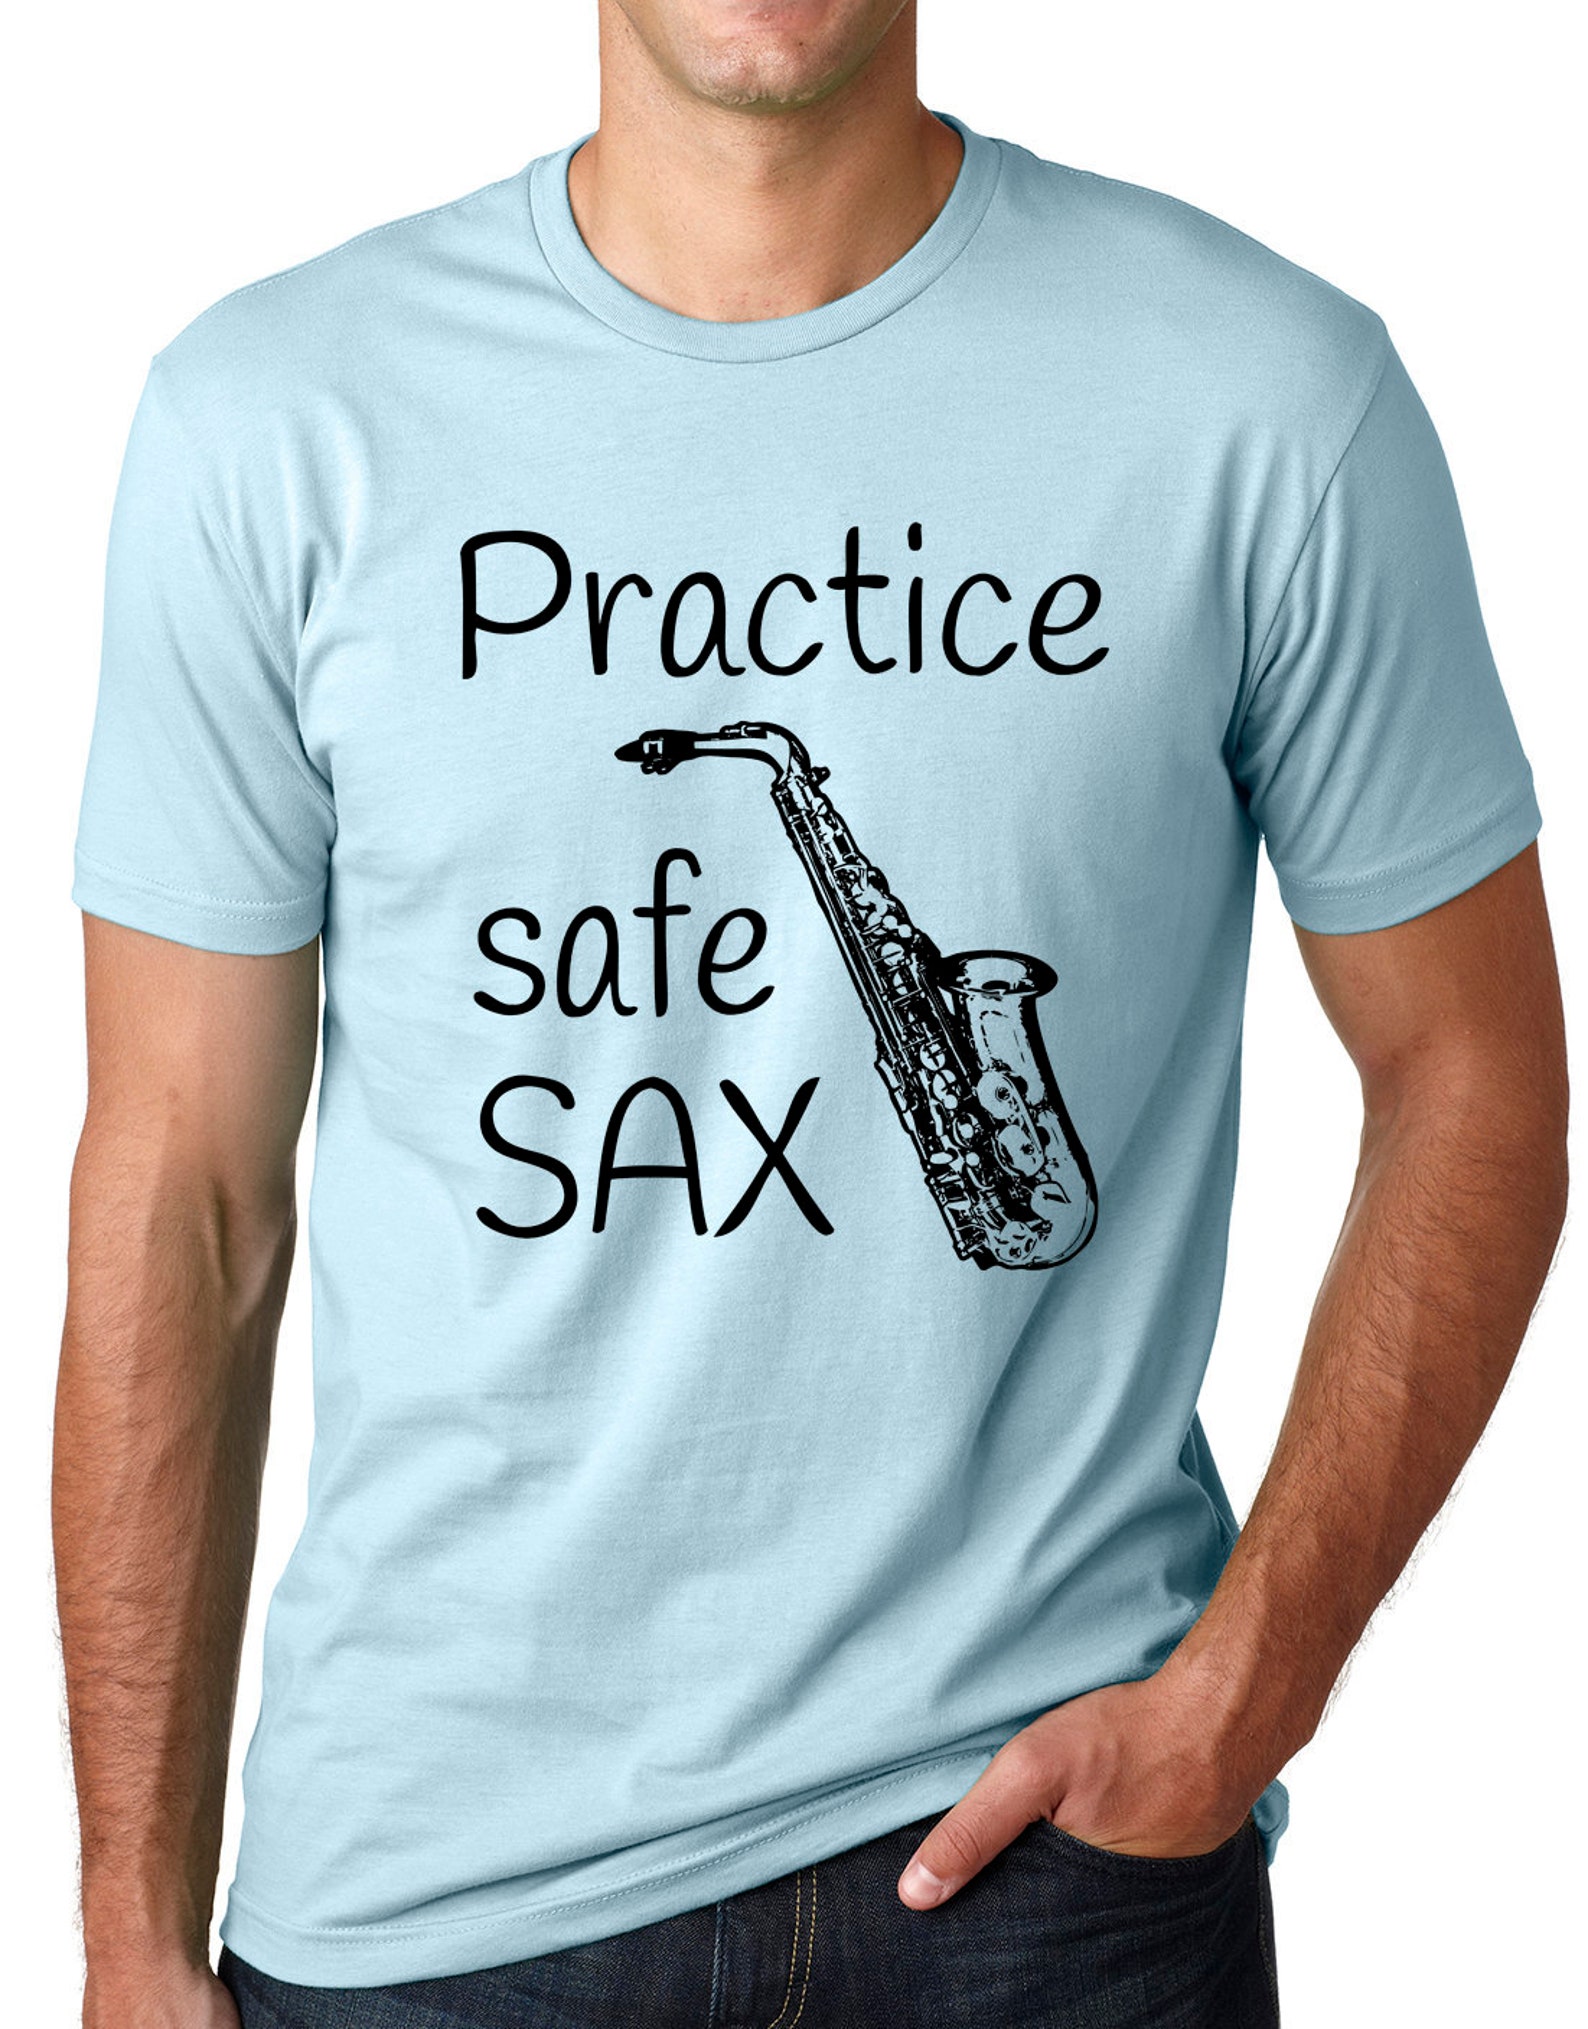 Практика безопасный саксофонист смешной саксофонист футболка 1 - изображени...